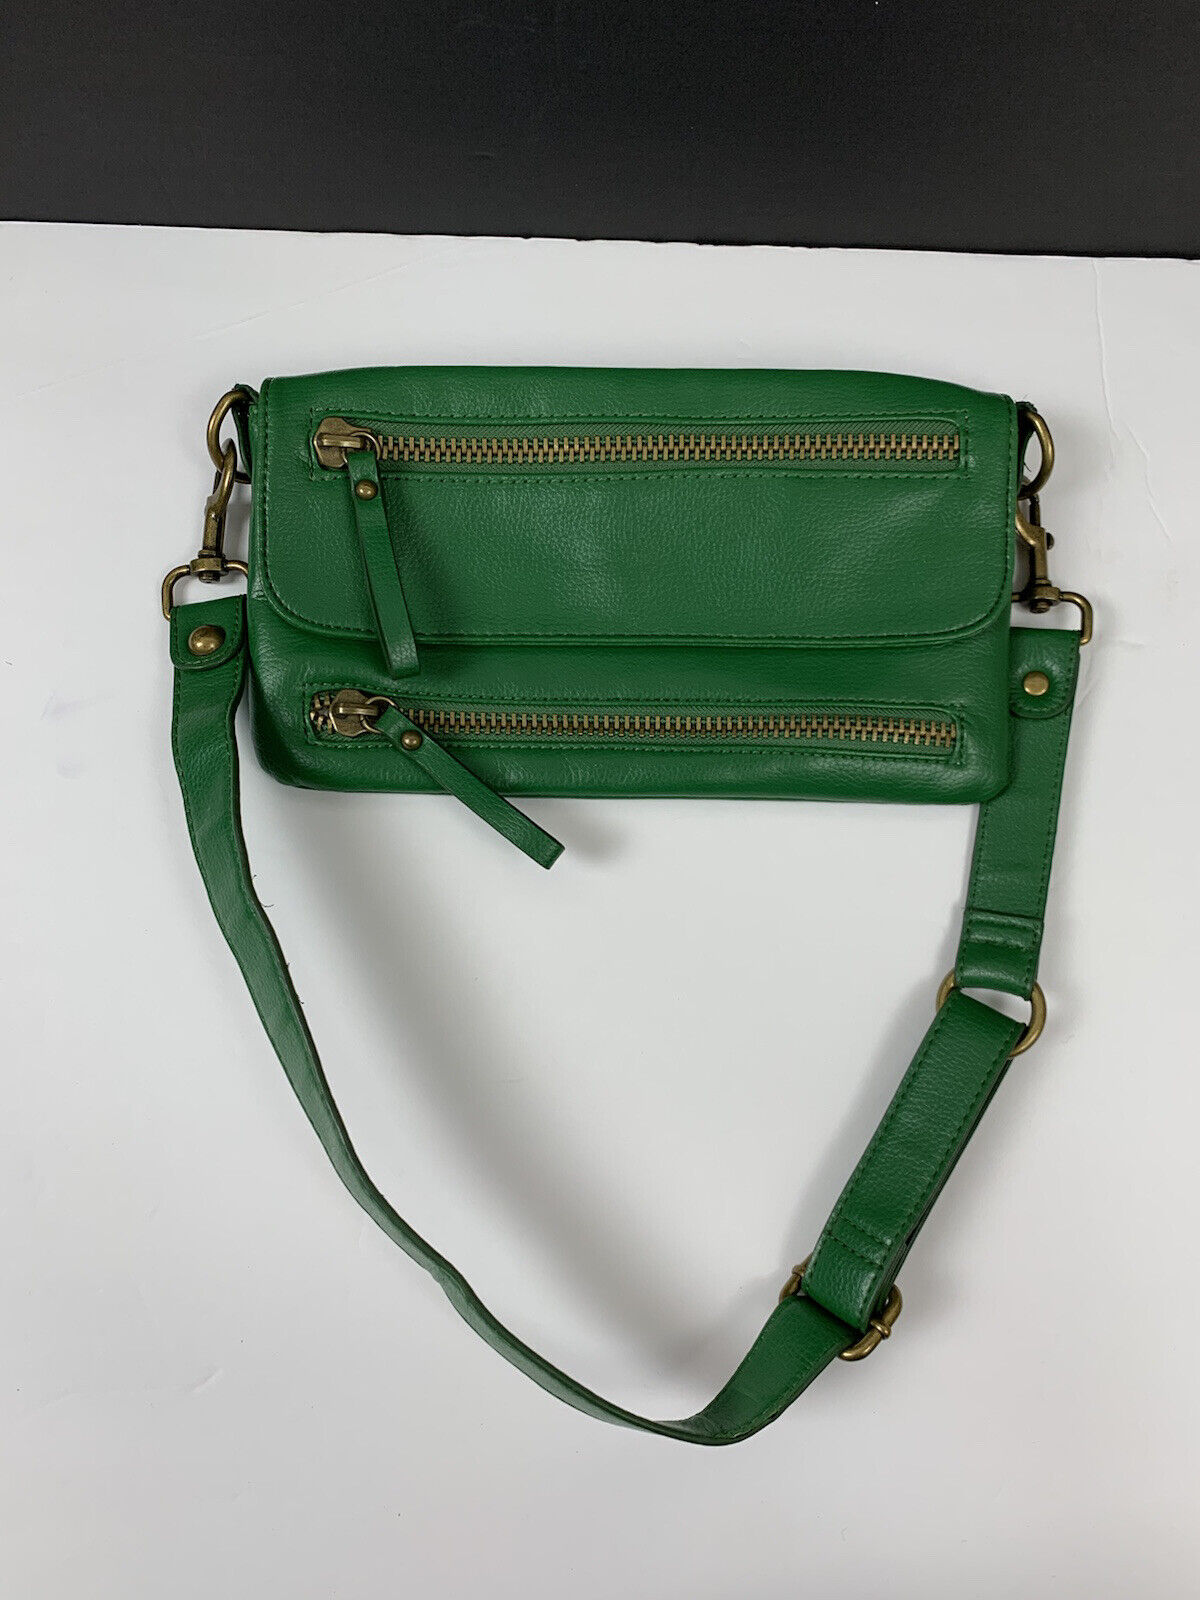 Vintage 80s Green Clutch 2021 Excellent new Purse Leather Handbag